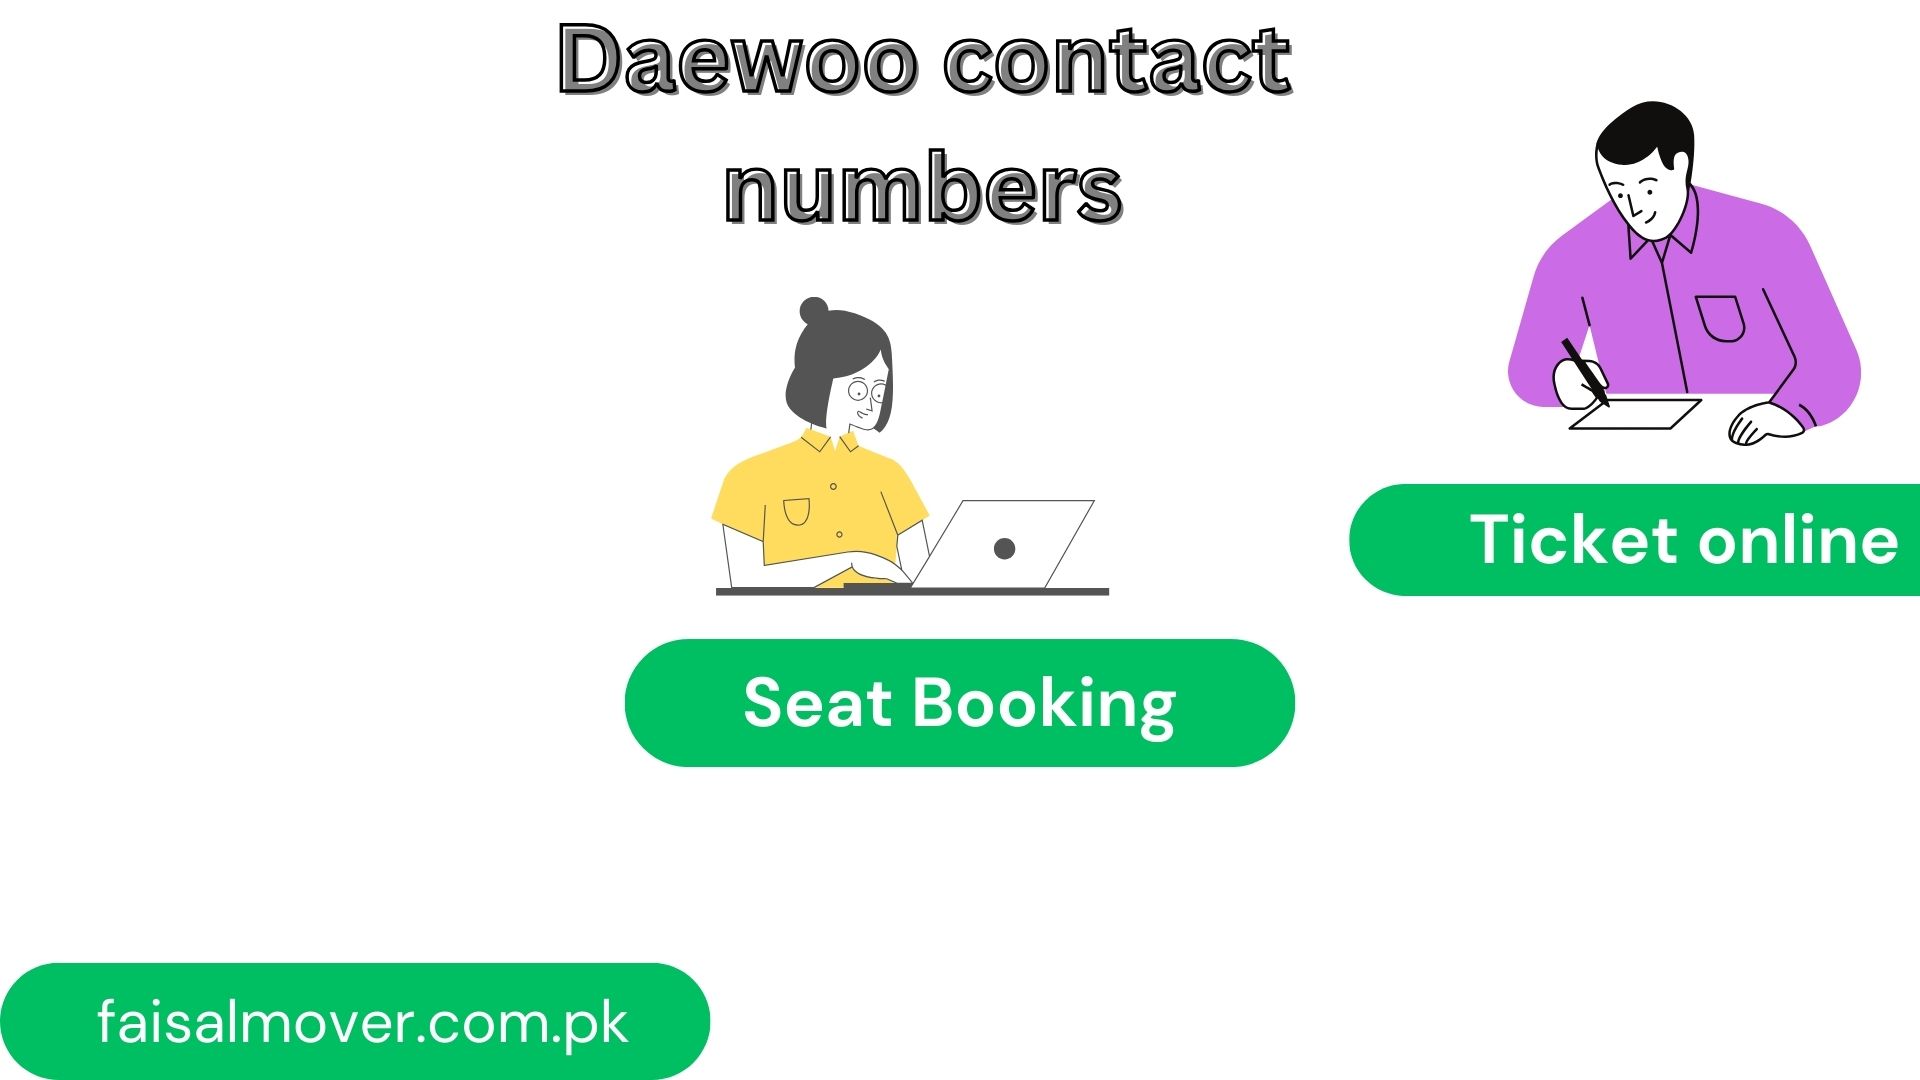 Daewoo contact numbers